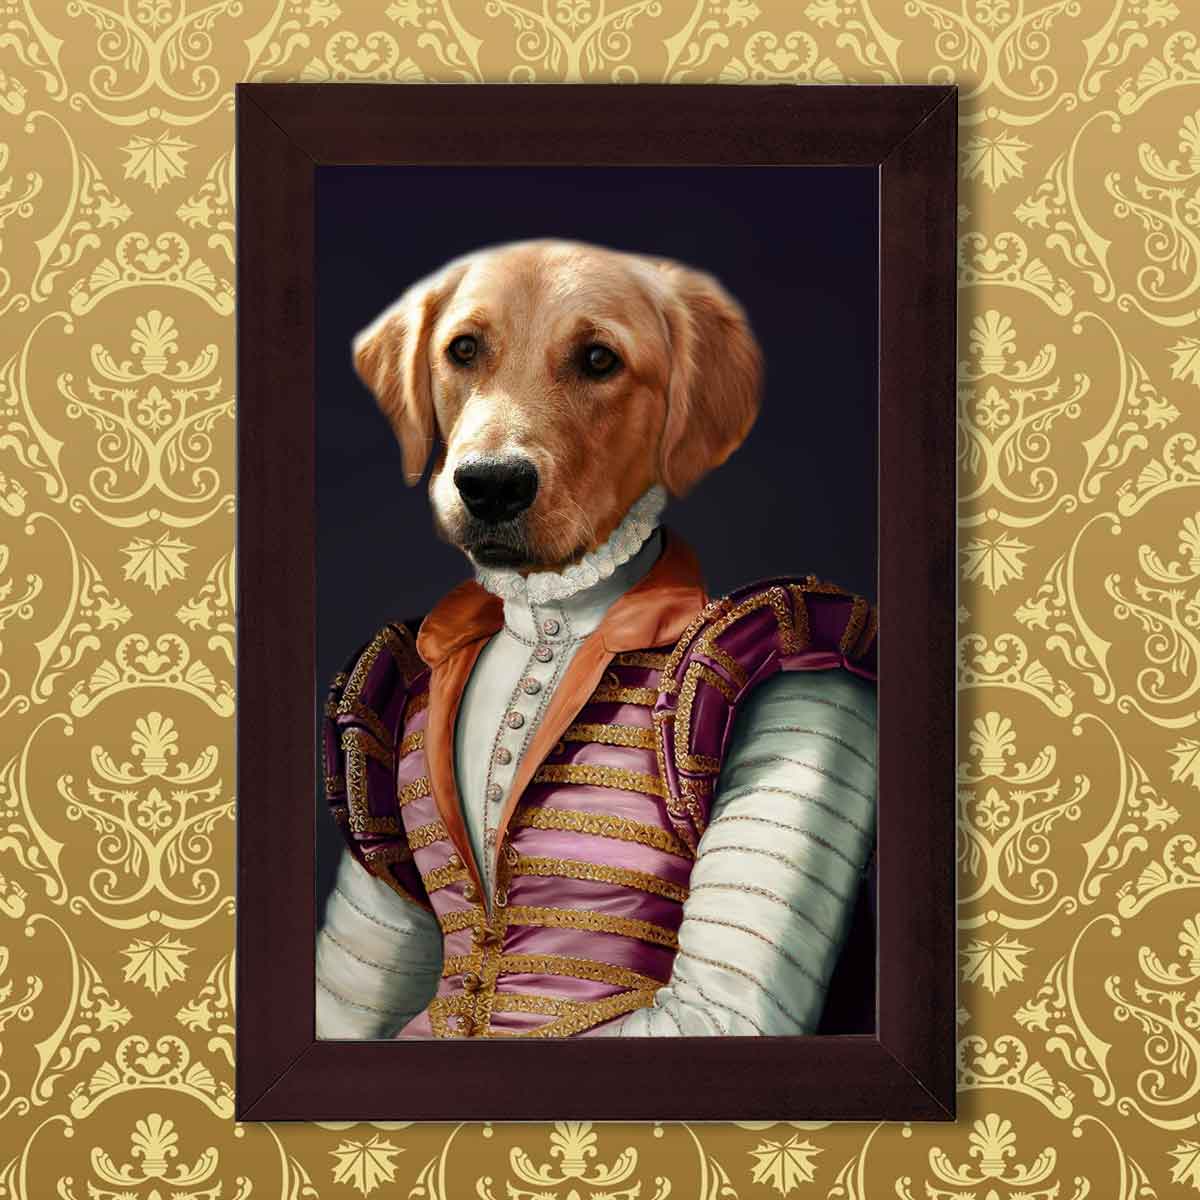 The Prince Pet Digital Portrait Photo Frame